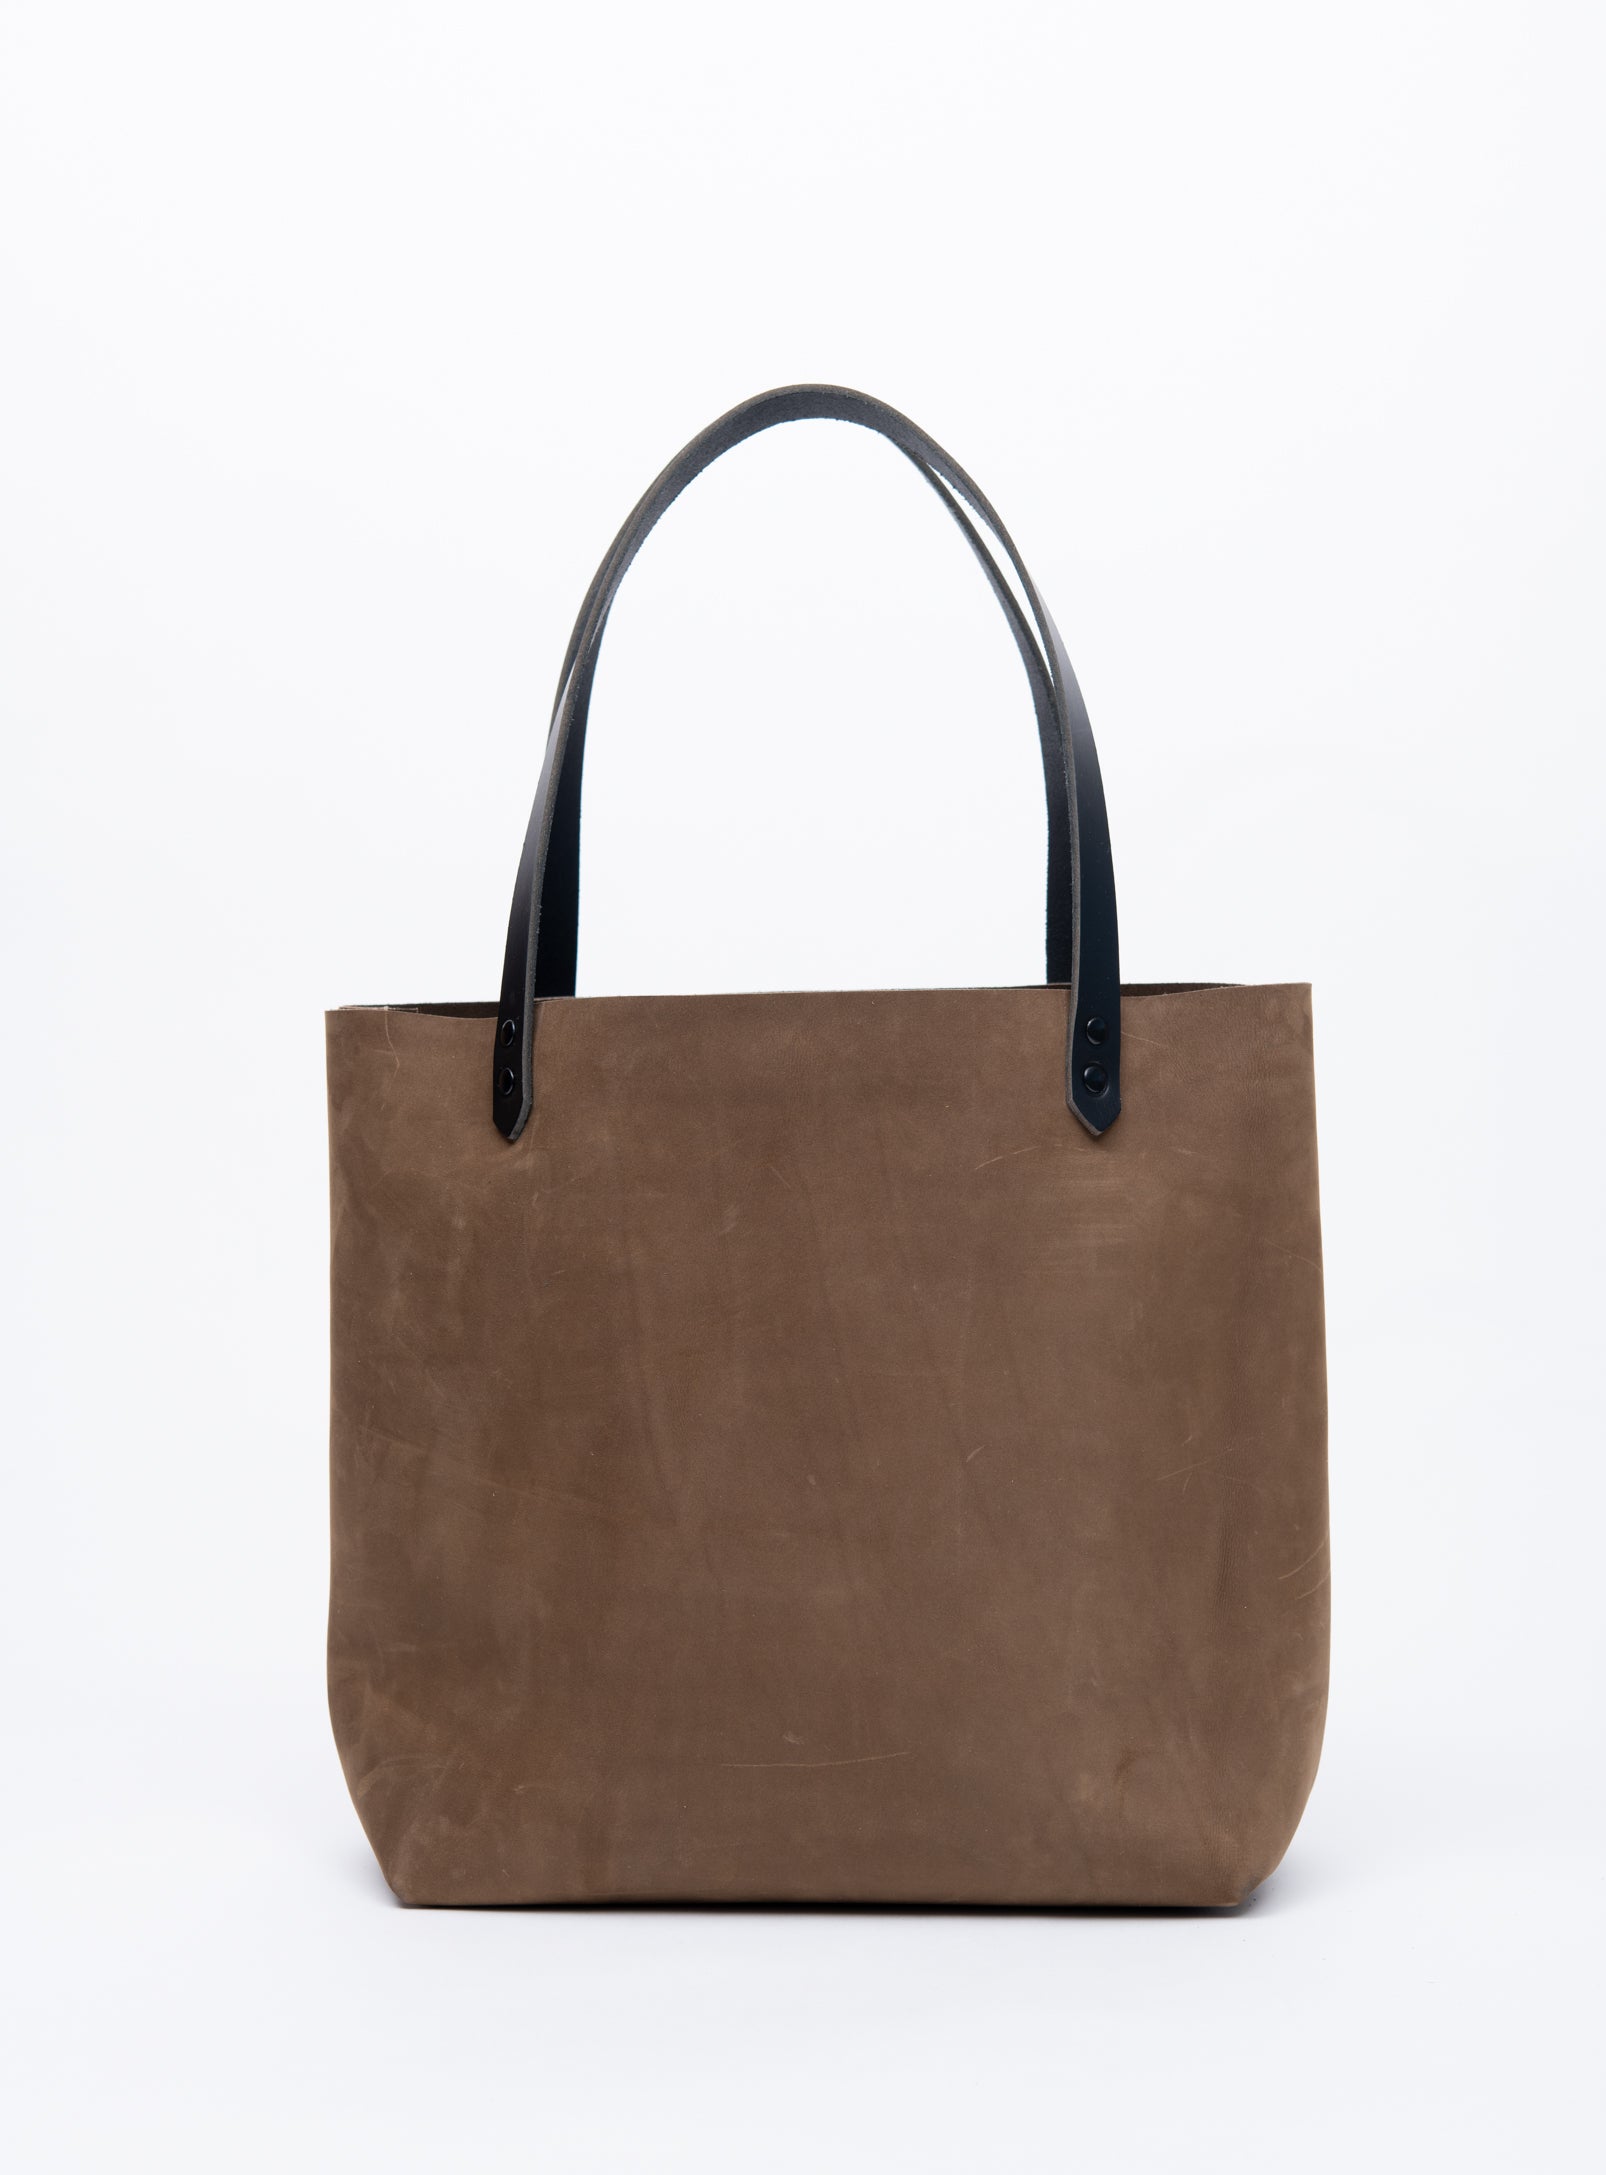 Leather minimalist tote bag FLORENCE model